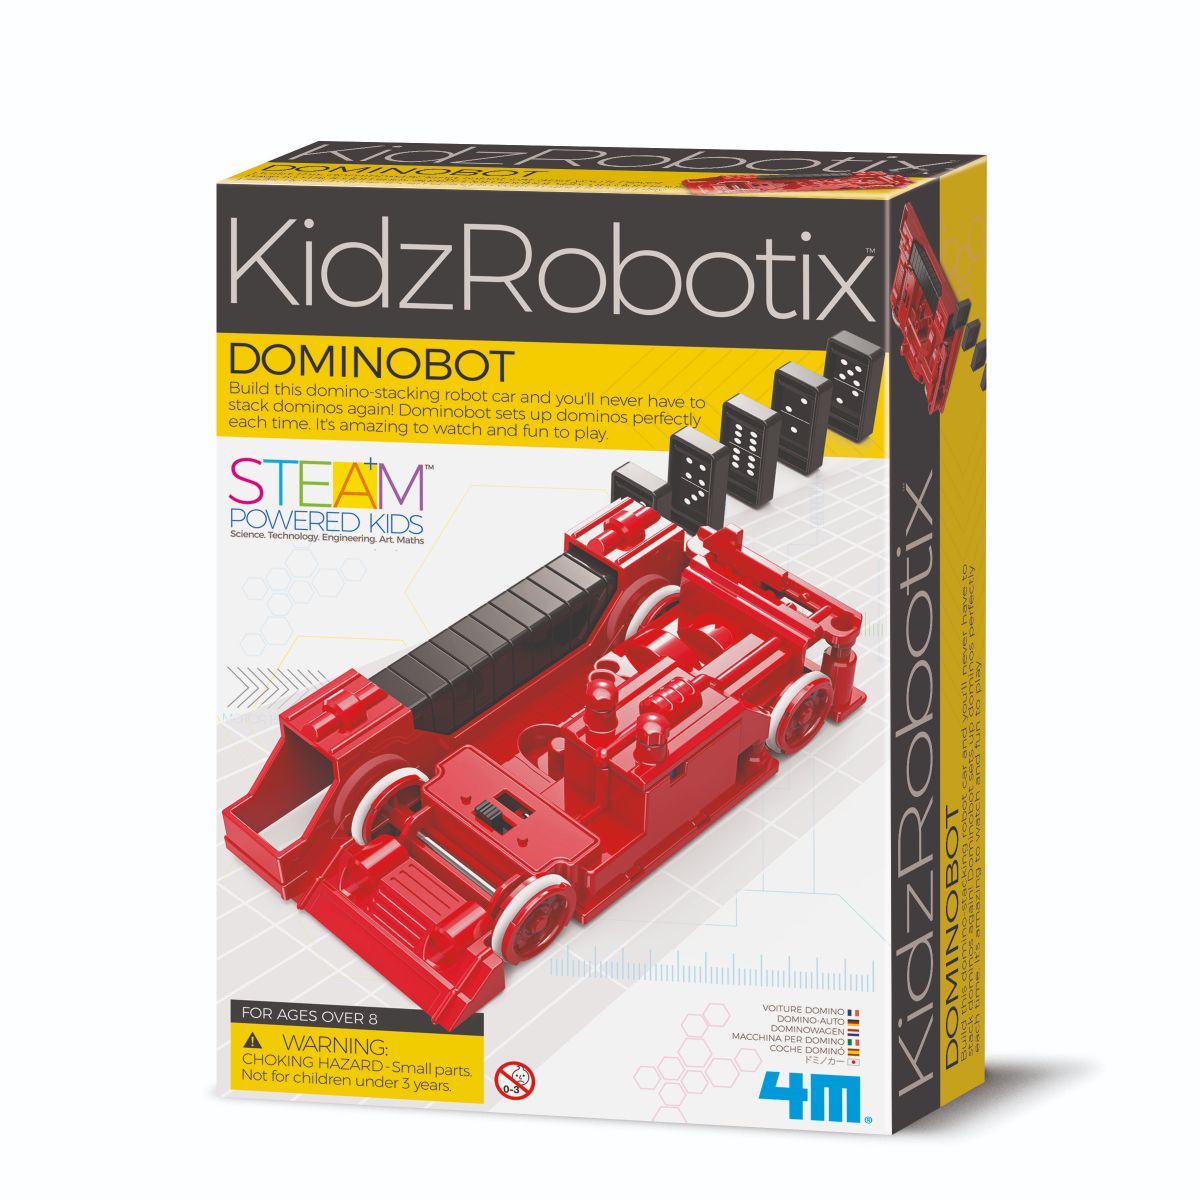 Kit constructie robot, Kidz Robotix, 4M, Dominobot 4M